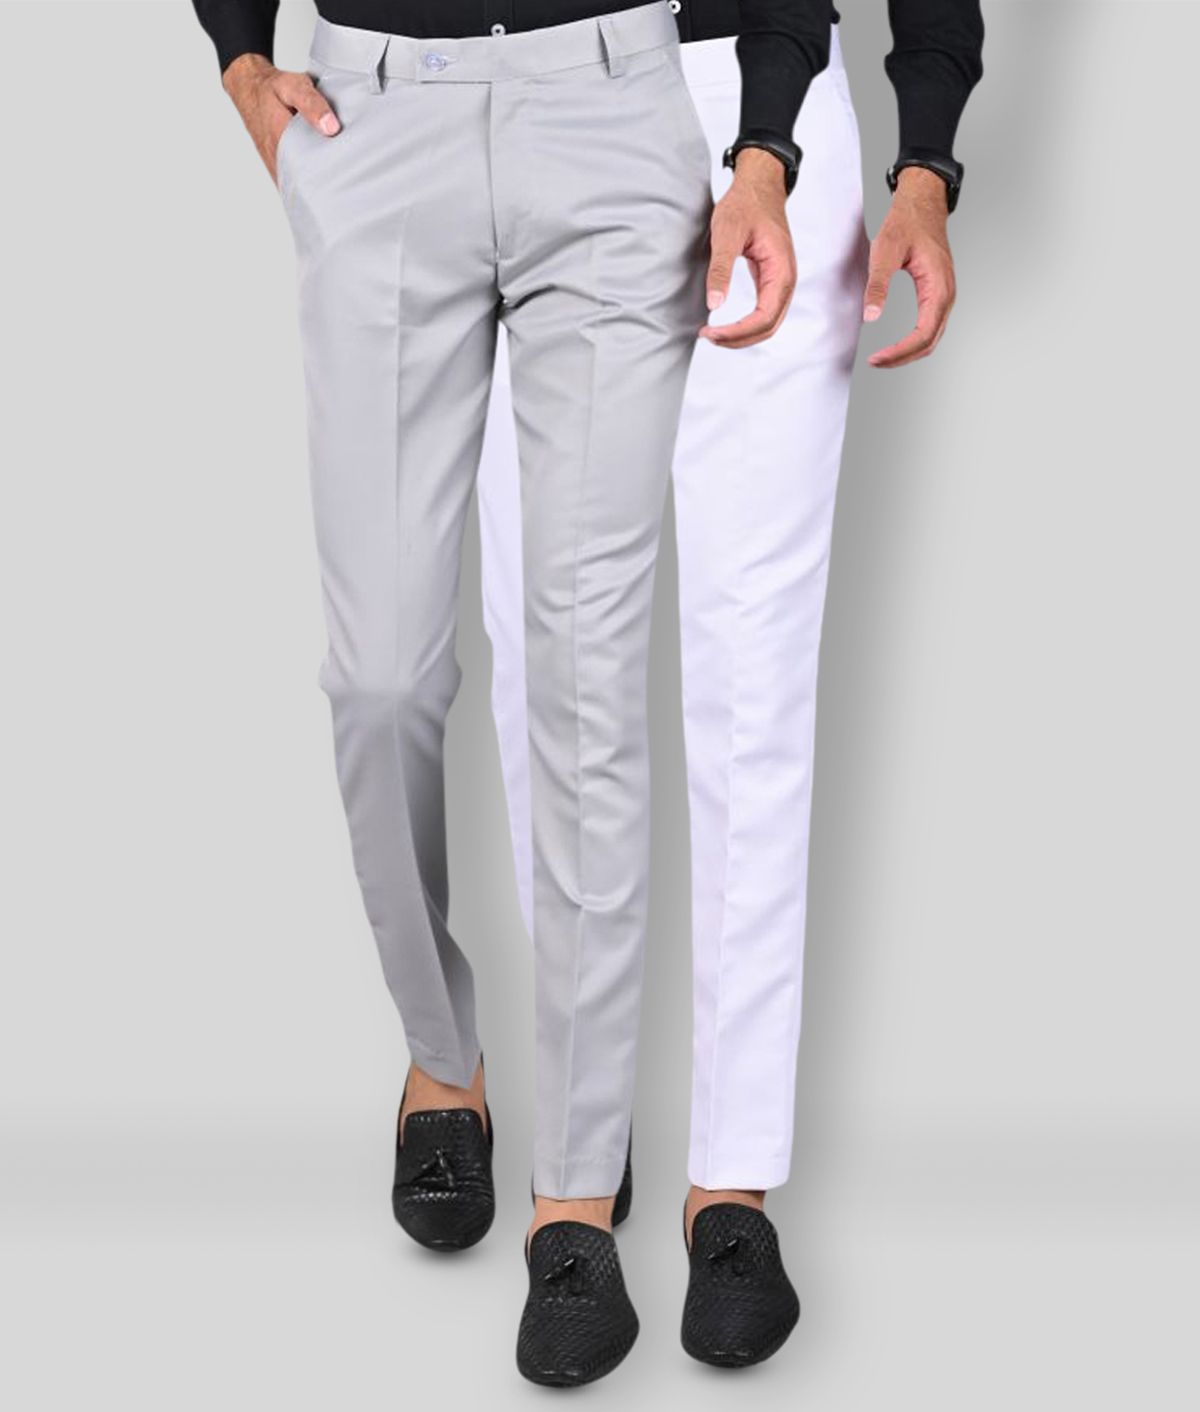     			MANCREW - White Polycotton Slim - Fit Men's Formal Pants ( Pack of 2 )